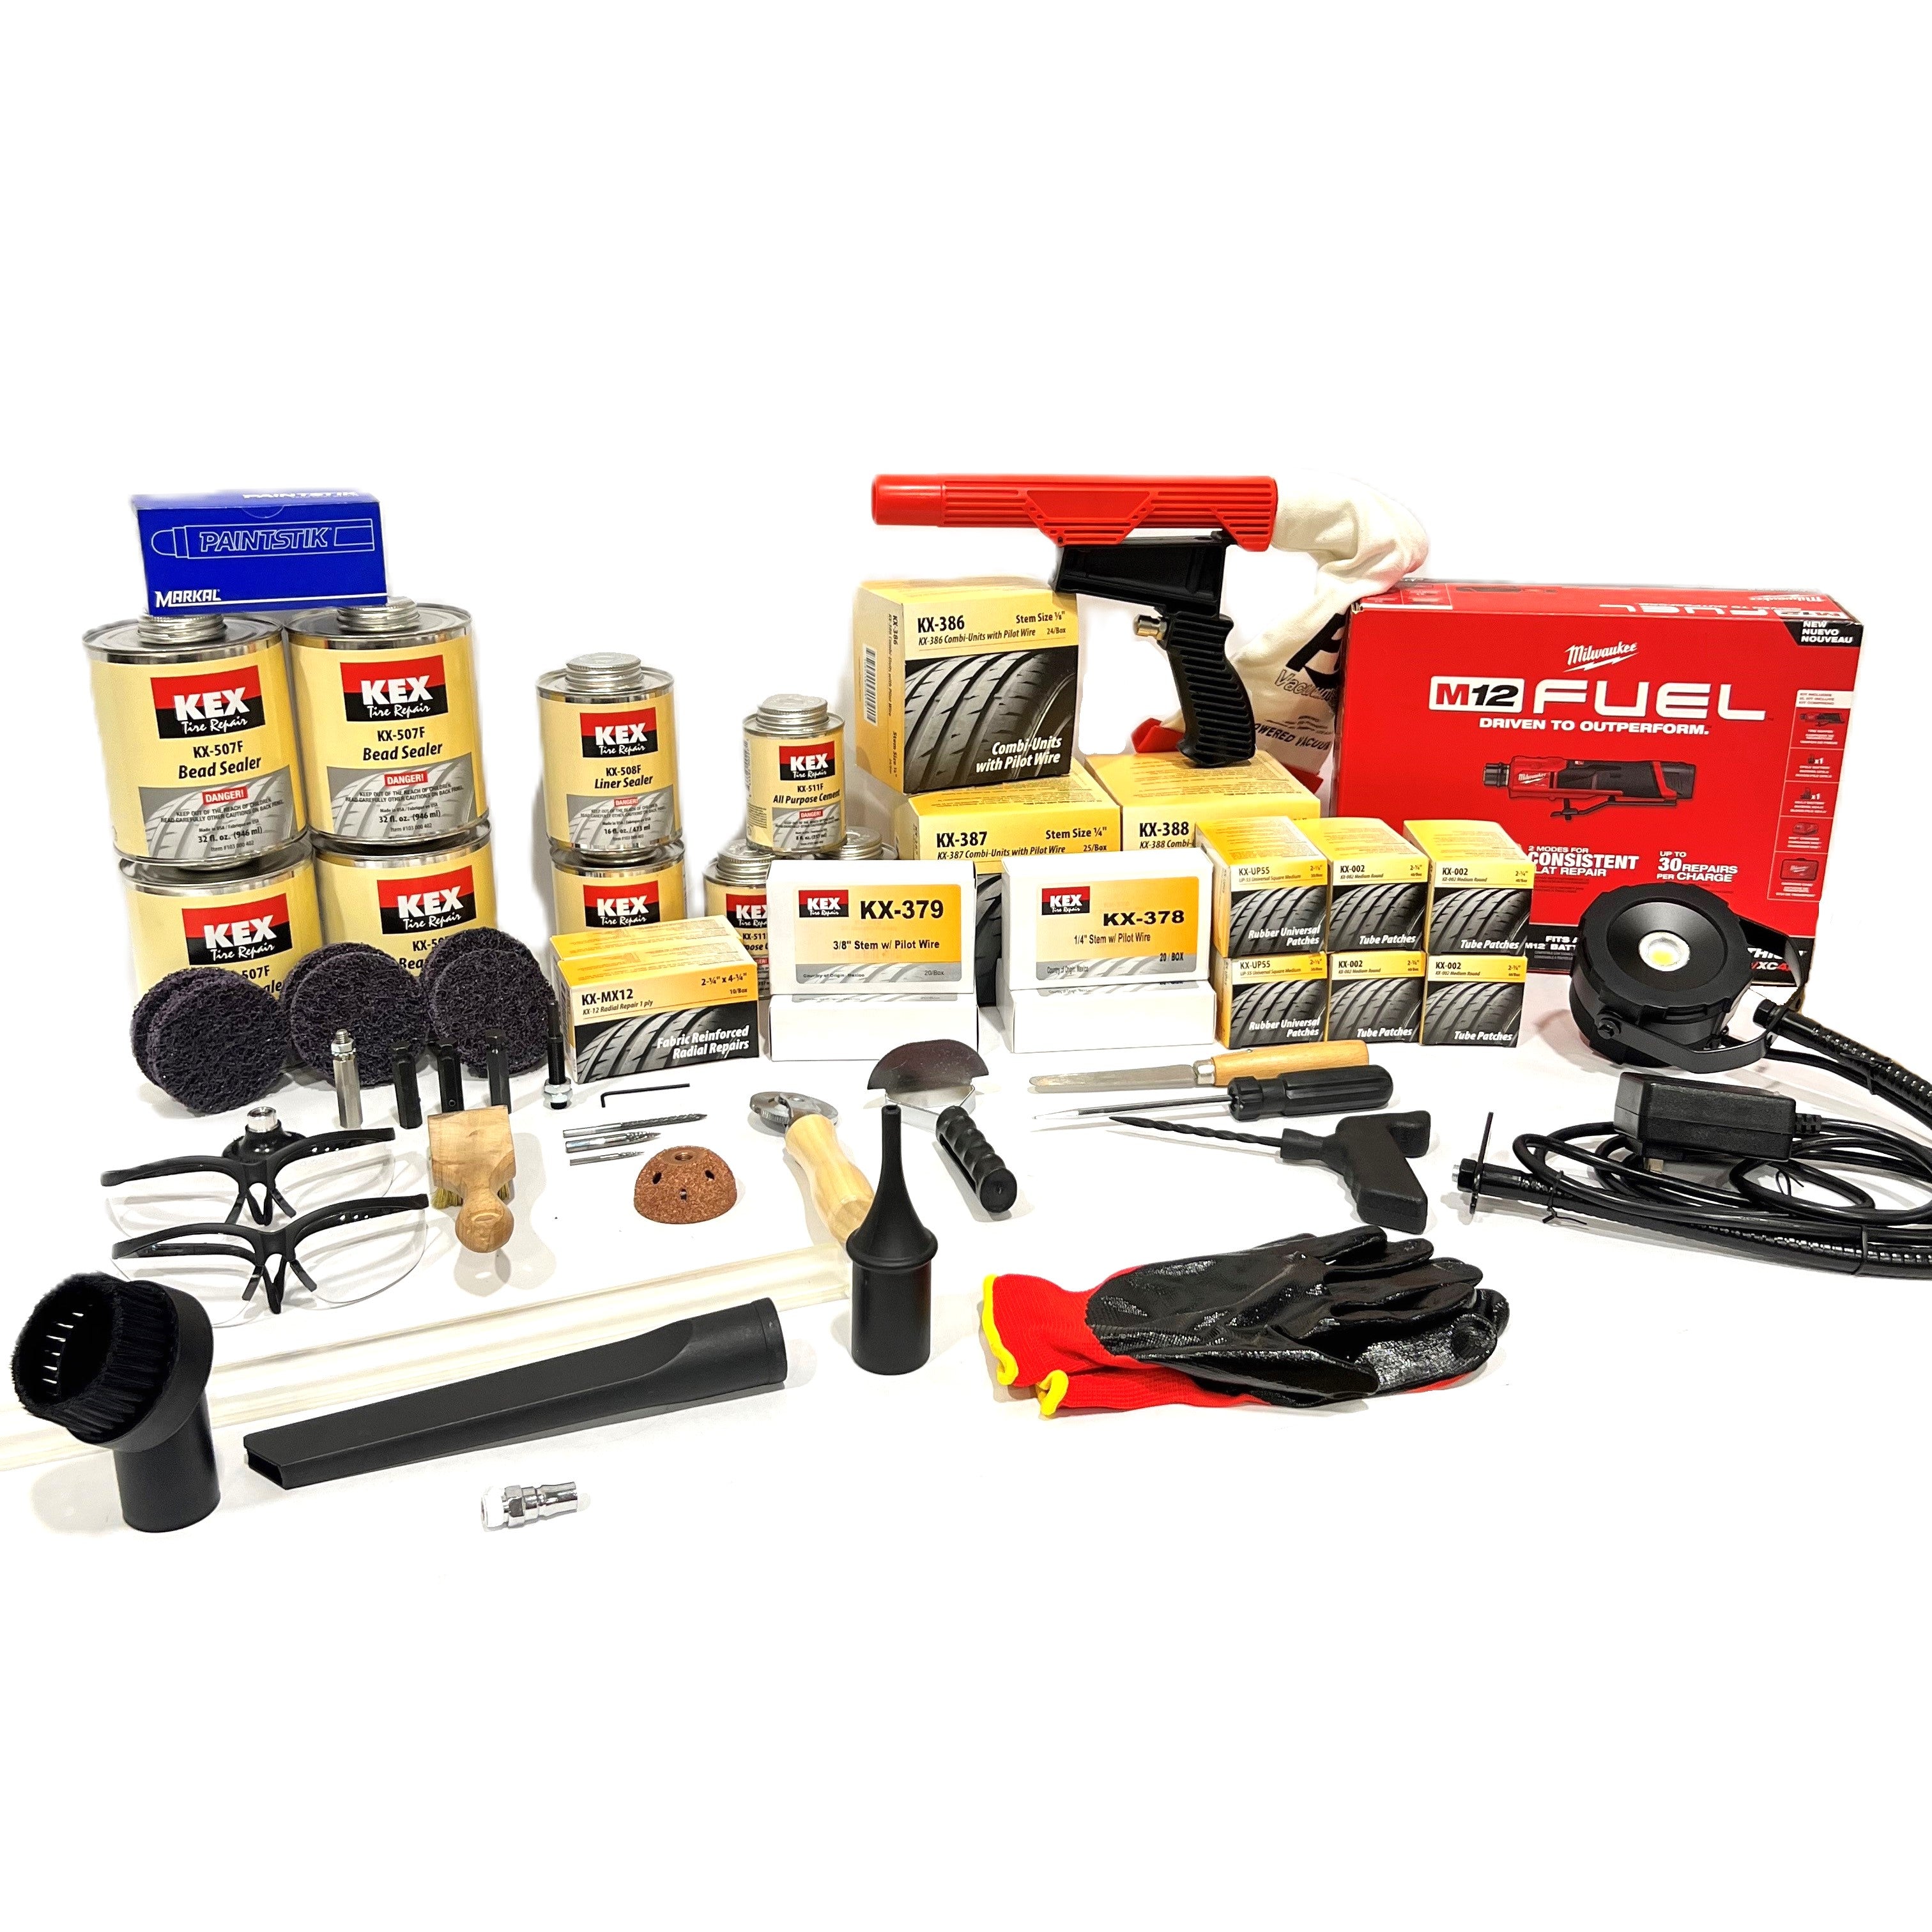 MT-RSR - Kex - Tire Repair Toolbox, w/ Worklight, Tire Spreader, Milwaukee Buffer Kit